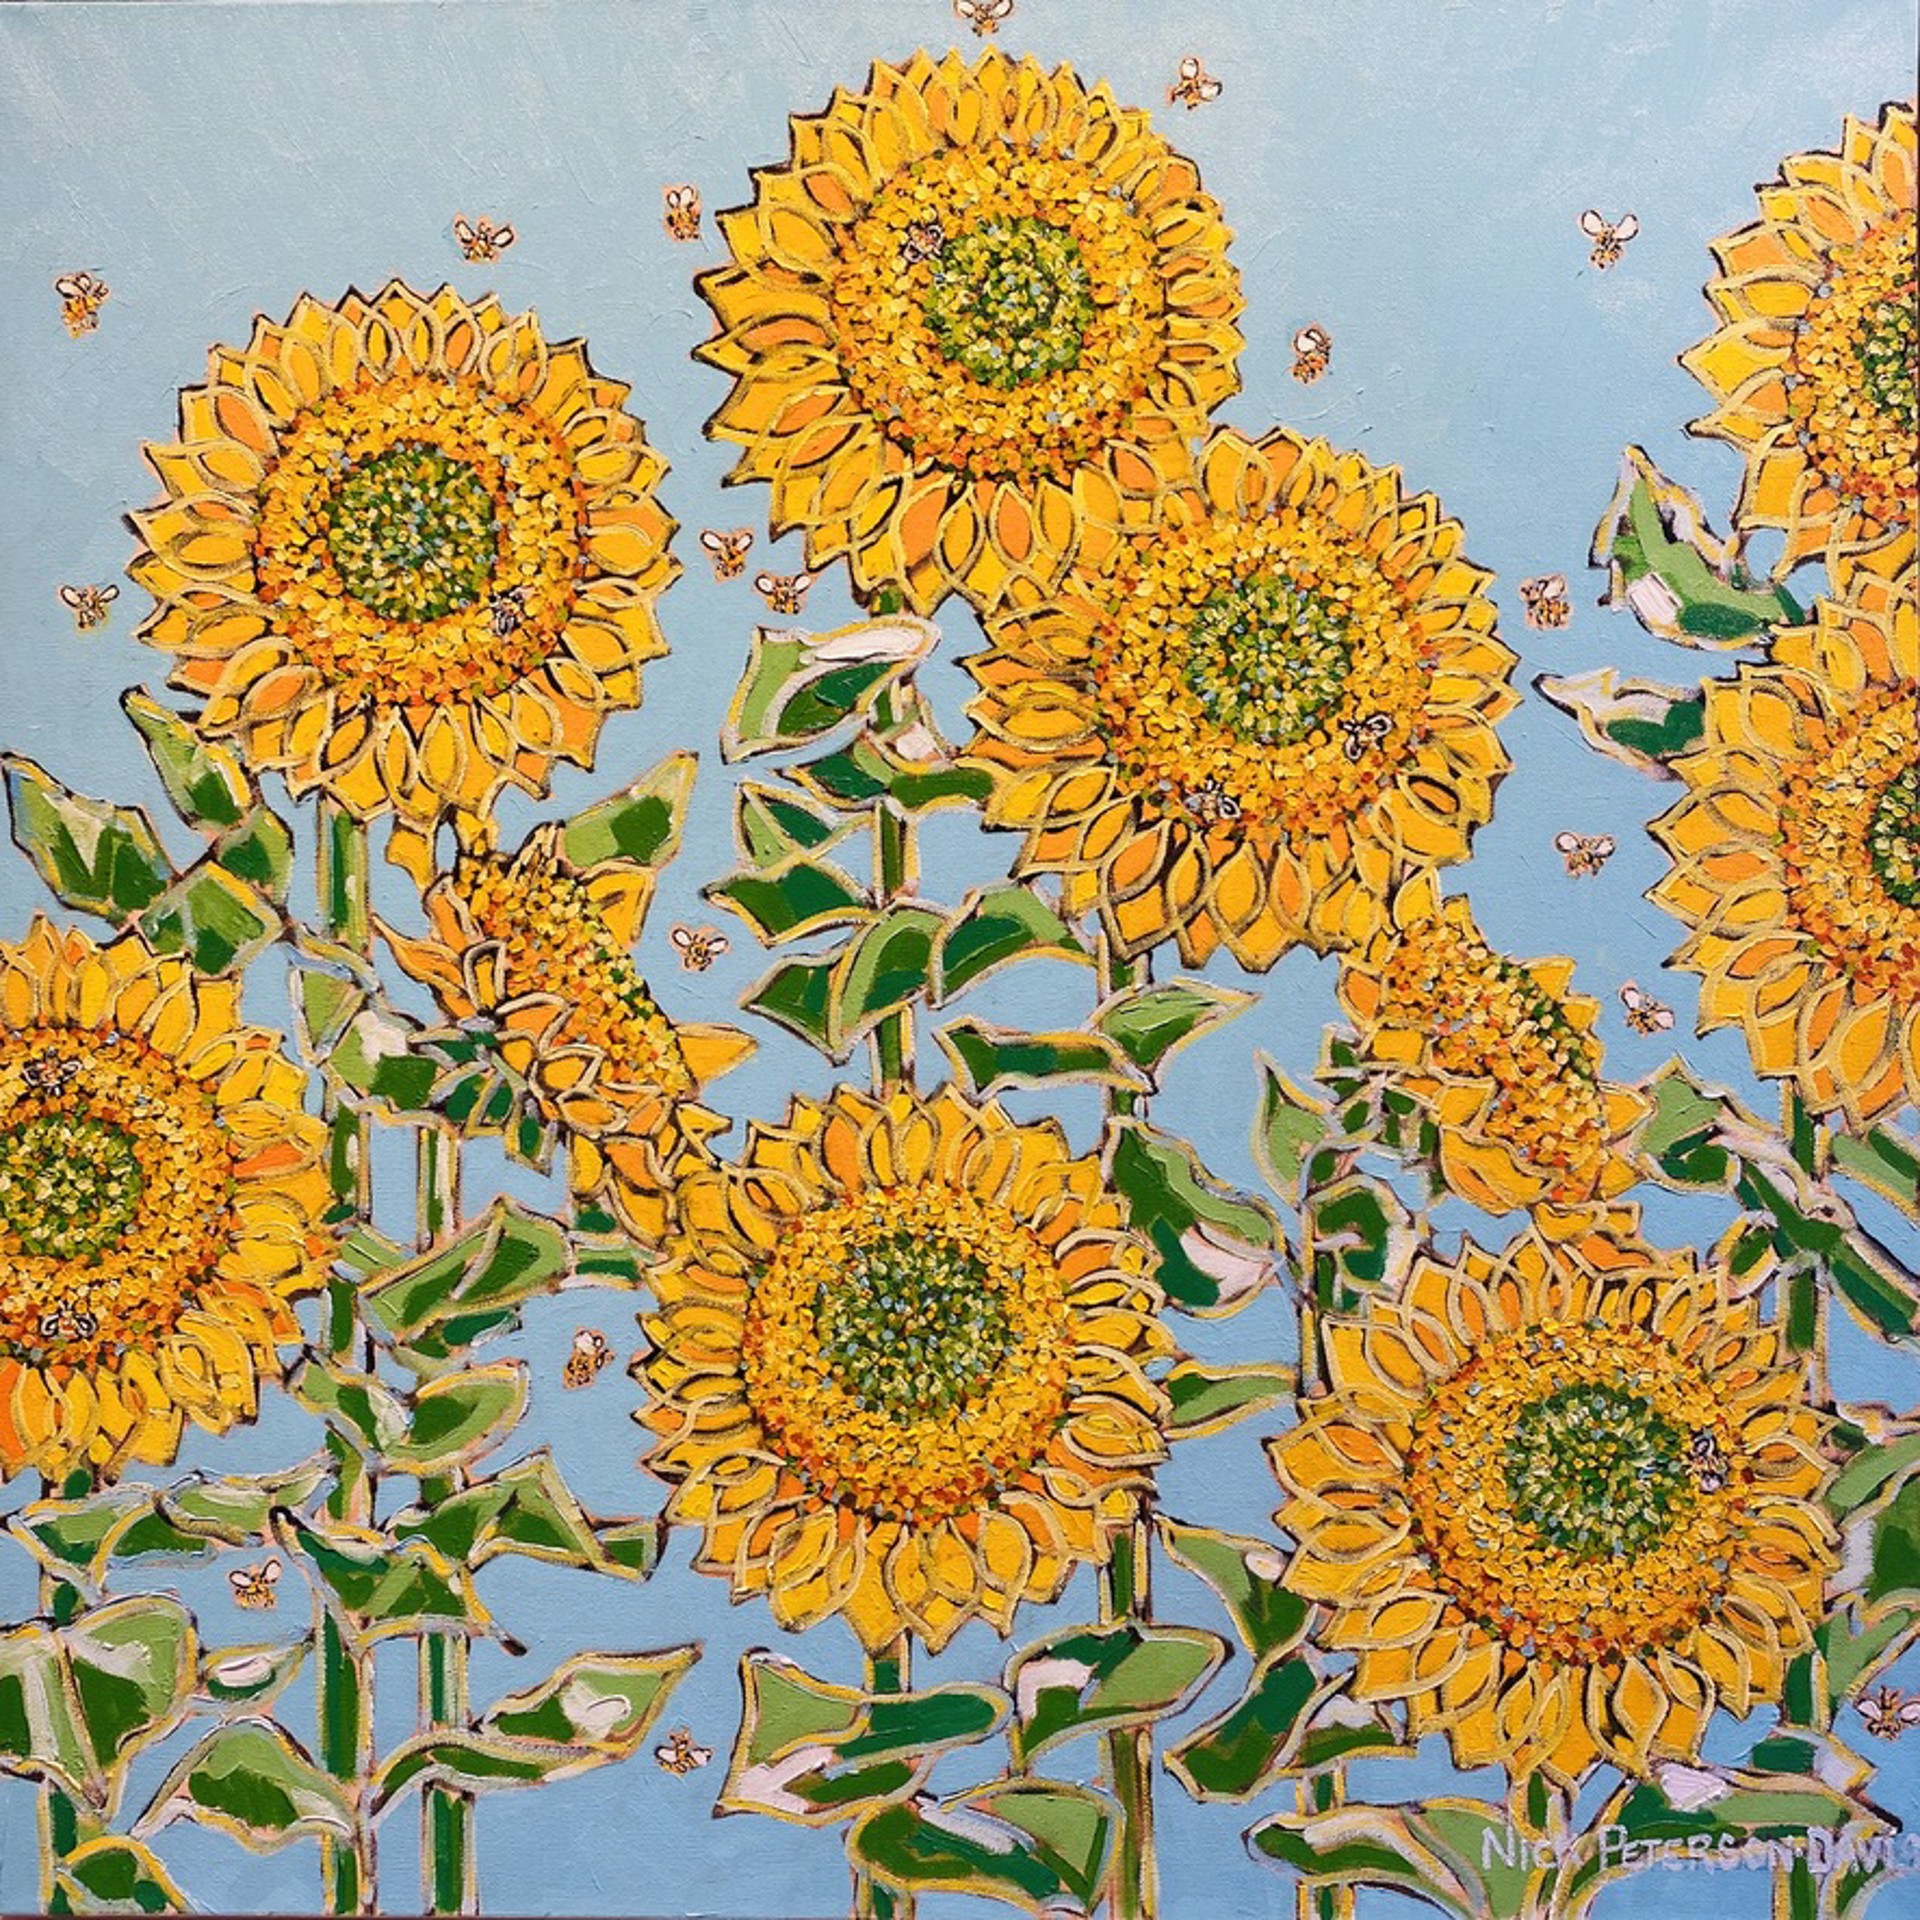 Sun Flowers I by Nicholas Peterson-Davis